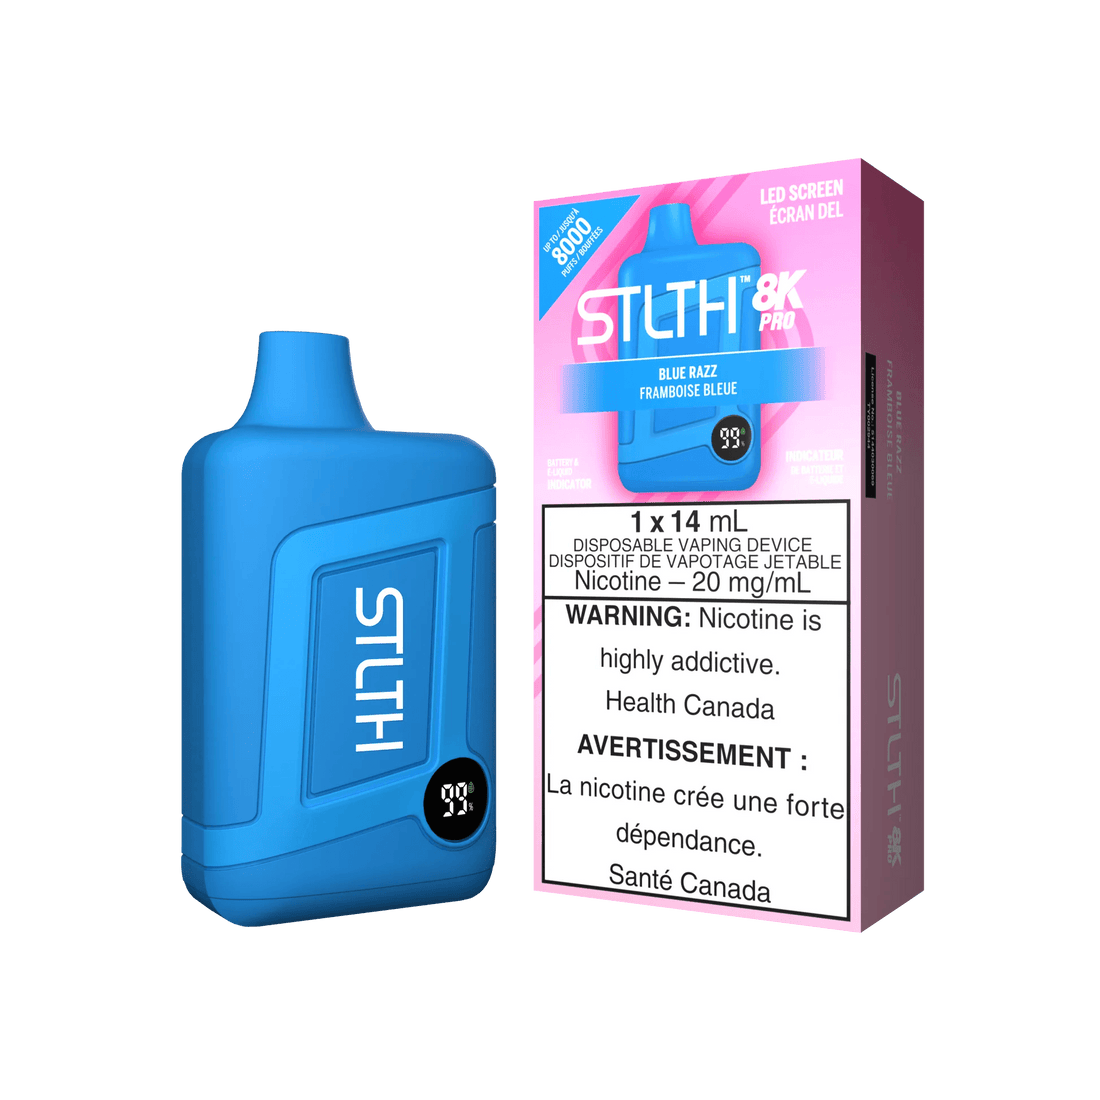 STLTH 8K Pro - Blue Razz - Vapor Shoppe